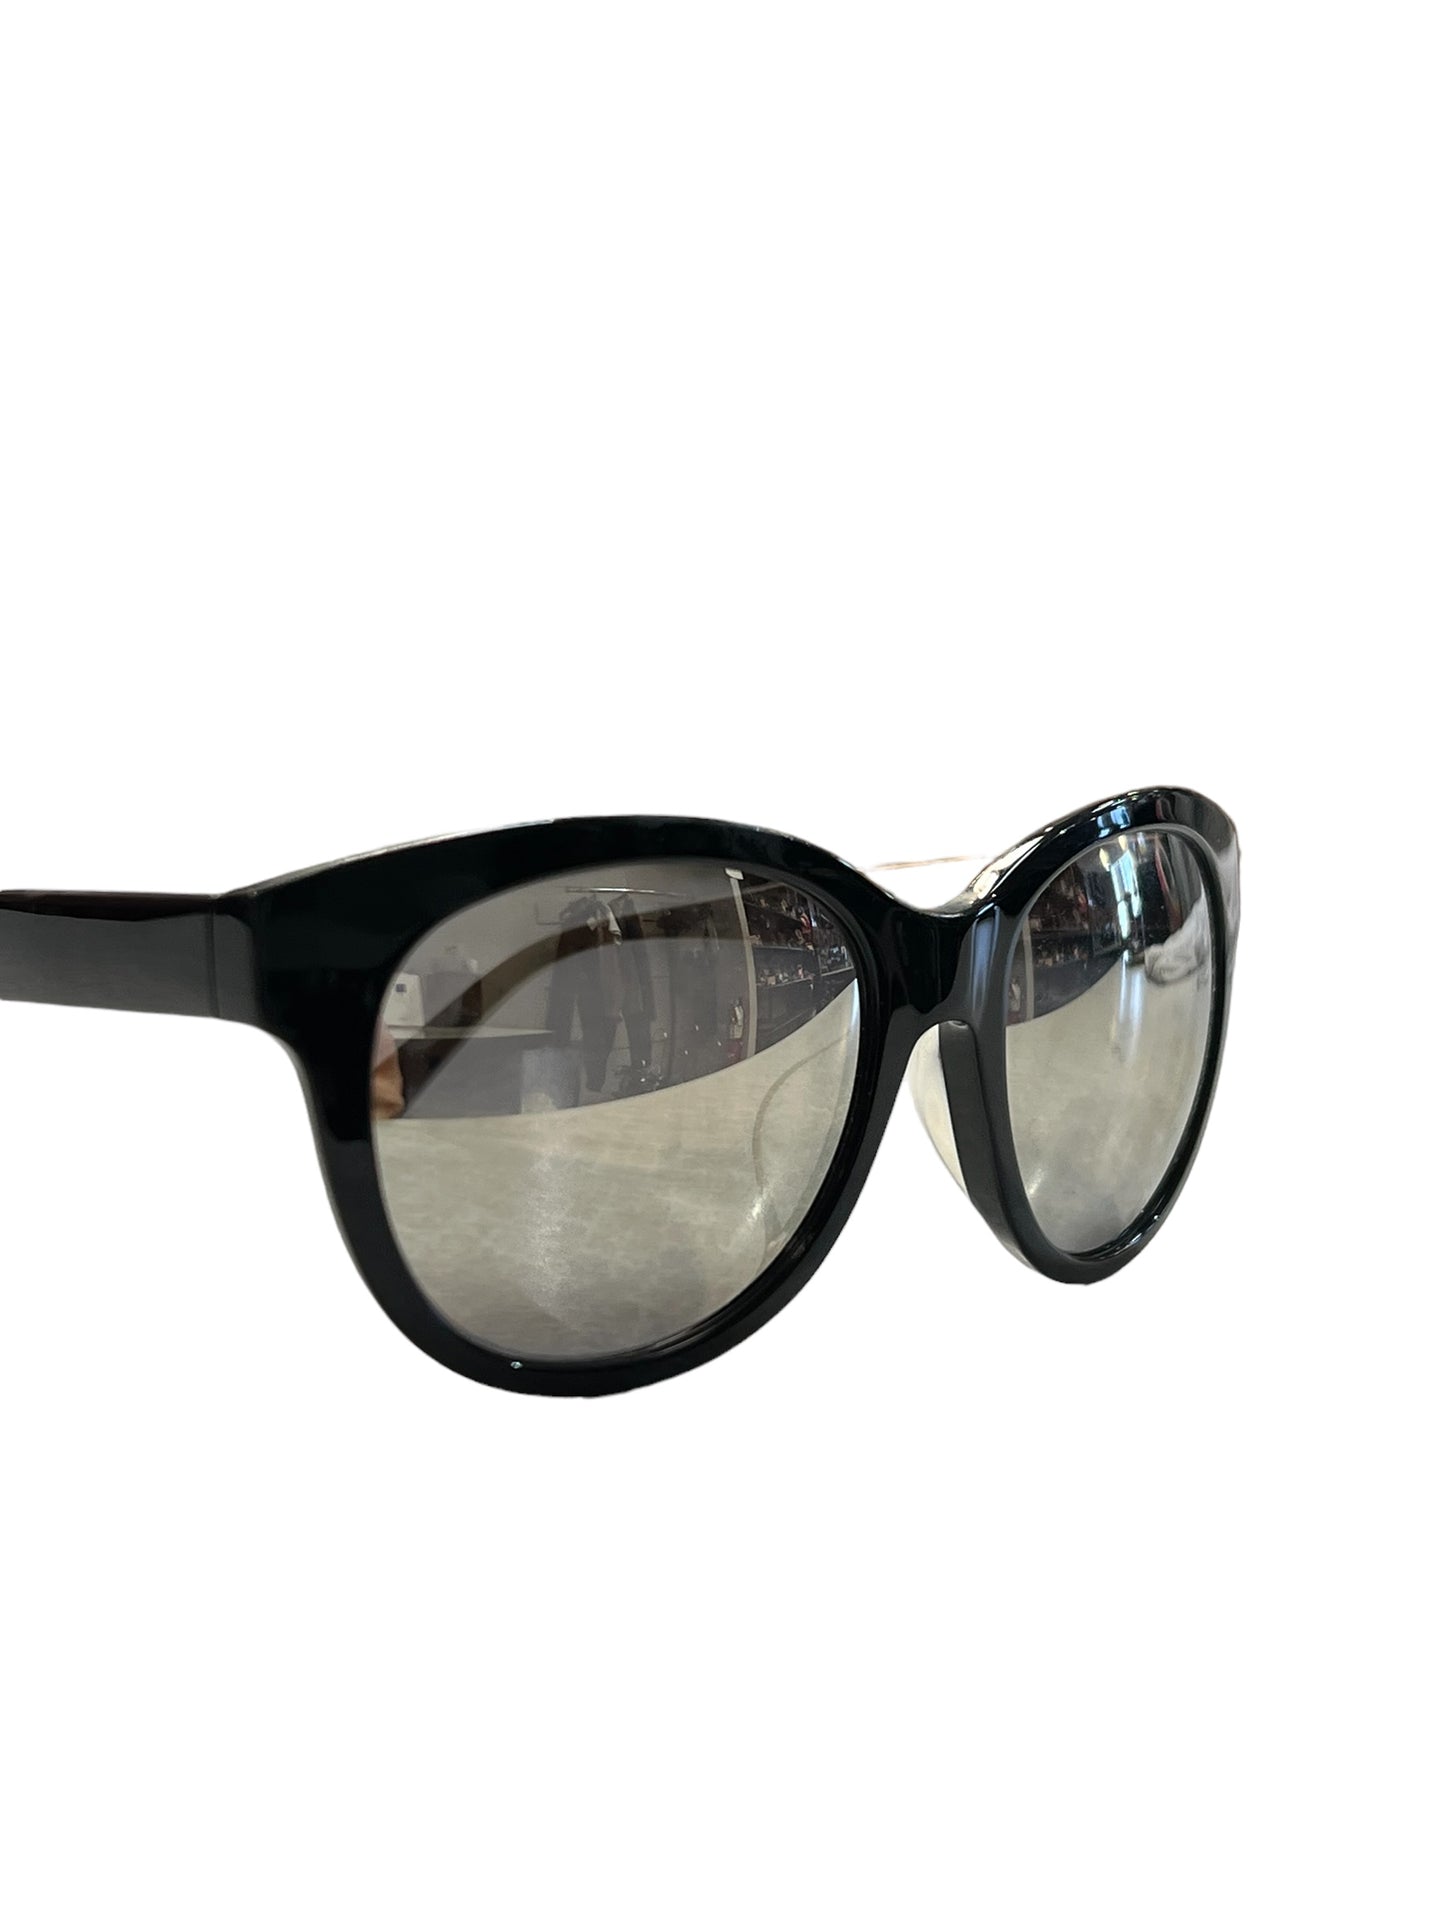 Sunglasses Luxury Designer By MCM Tea cup sunglasses